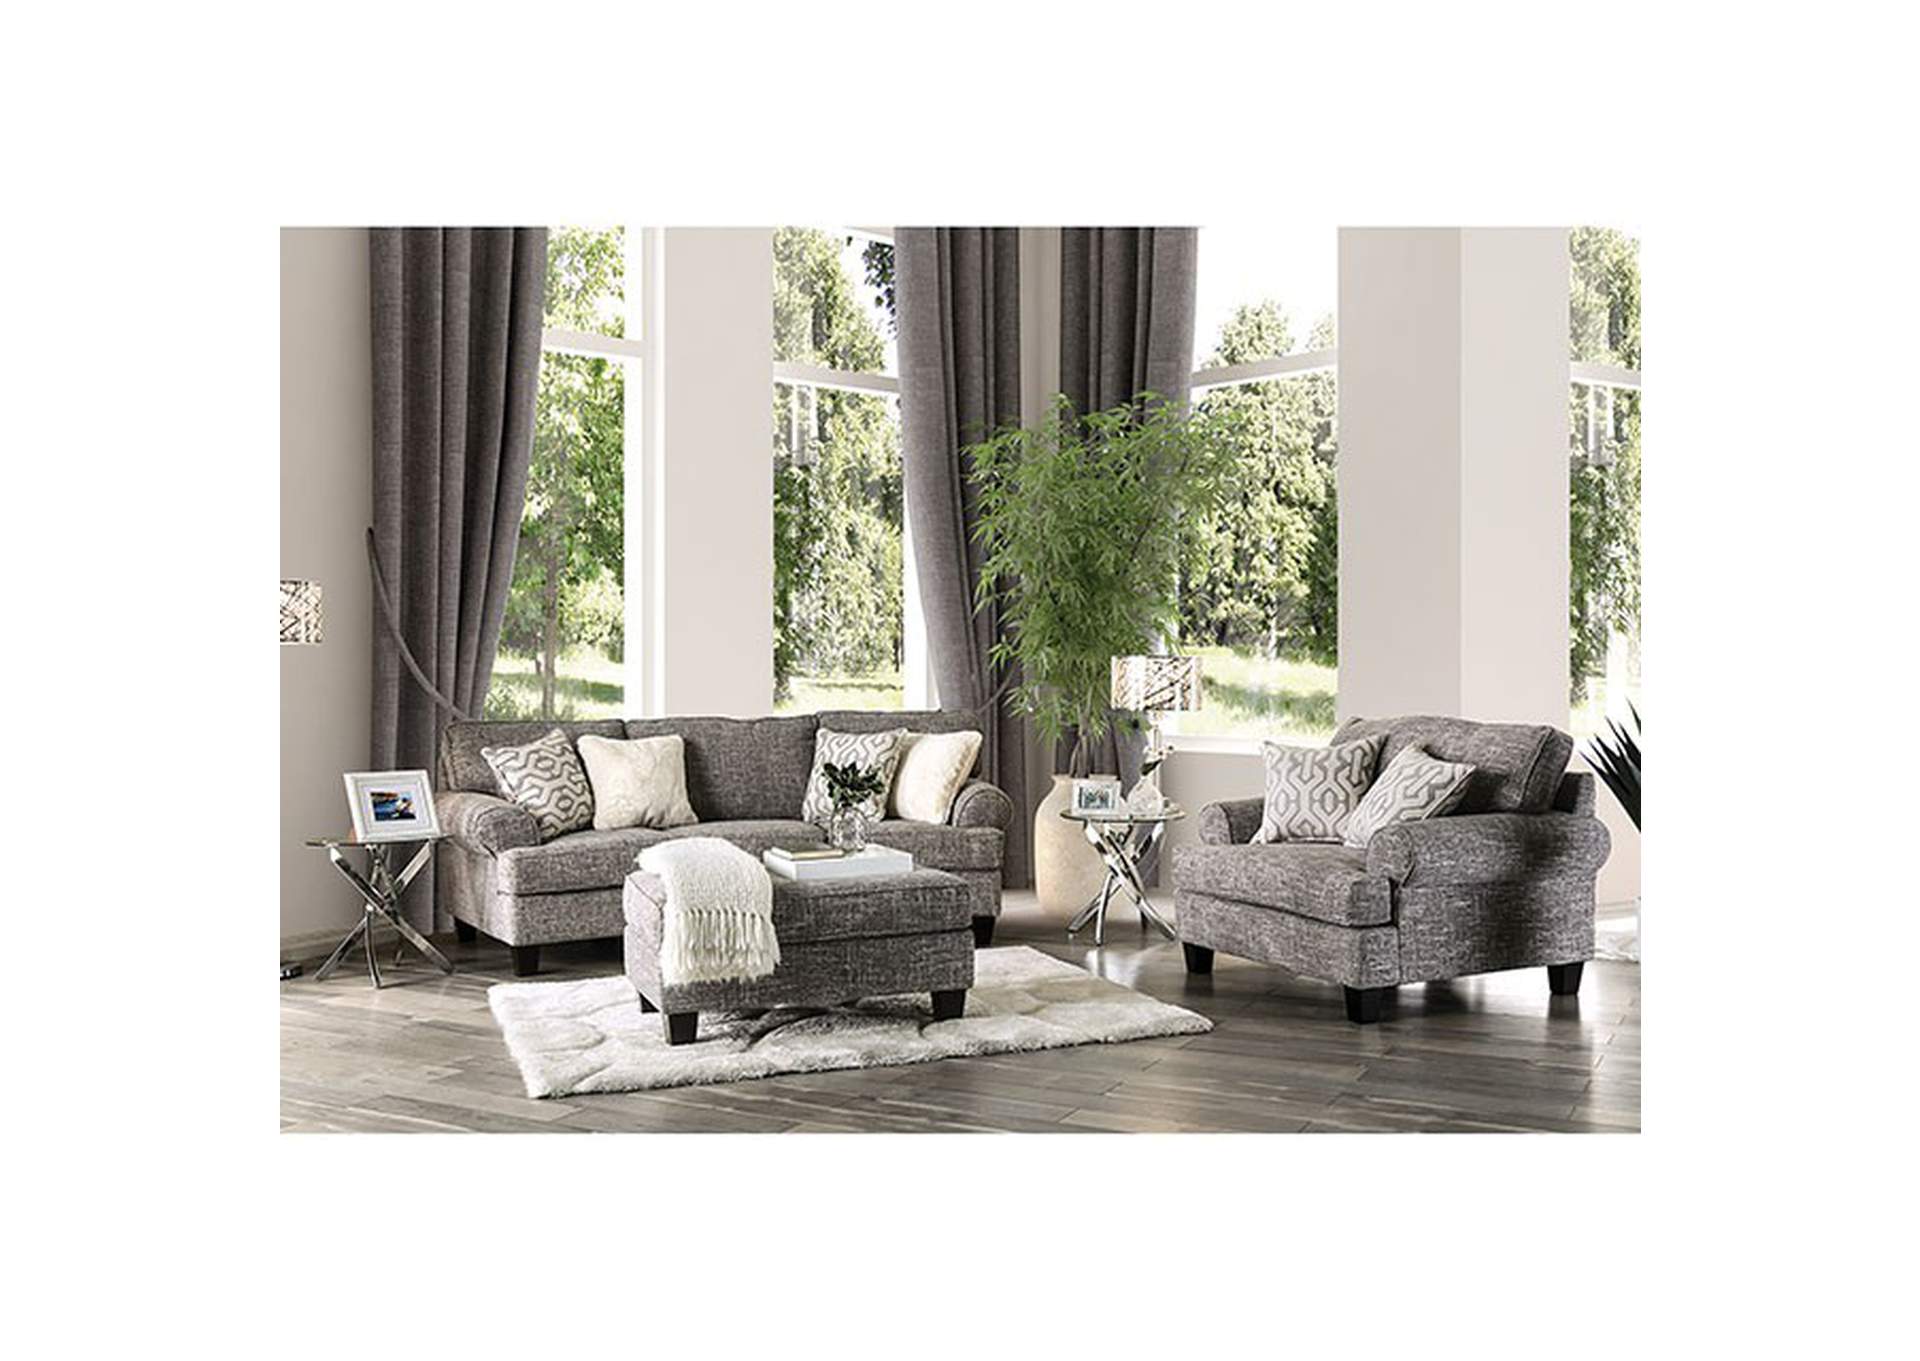 Pierpont Gray Sofa,Furniture of America